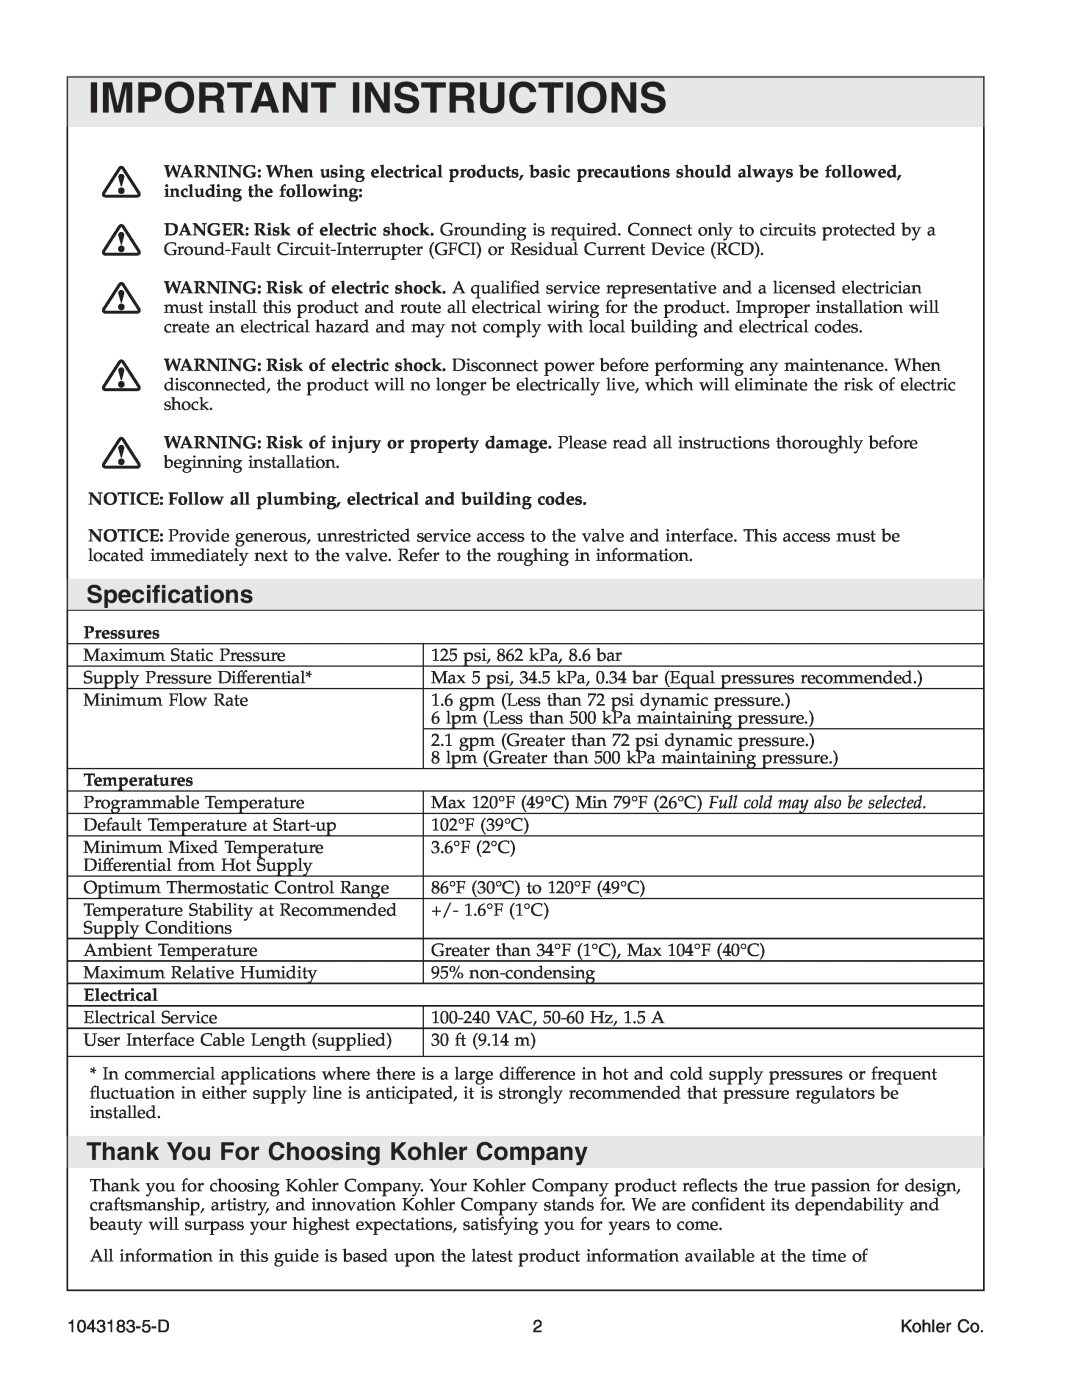 Kohler 1043183-5-D manual Important Instructions, Speciﬁcations, Thank You For Choosing Kohler Company 